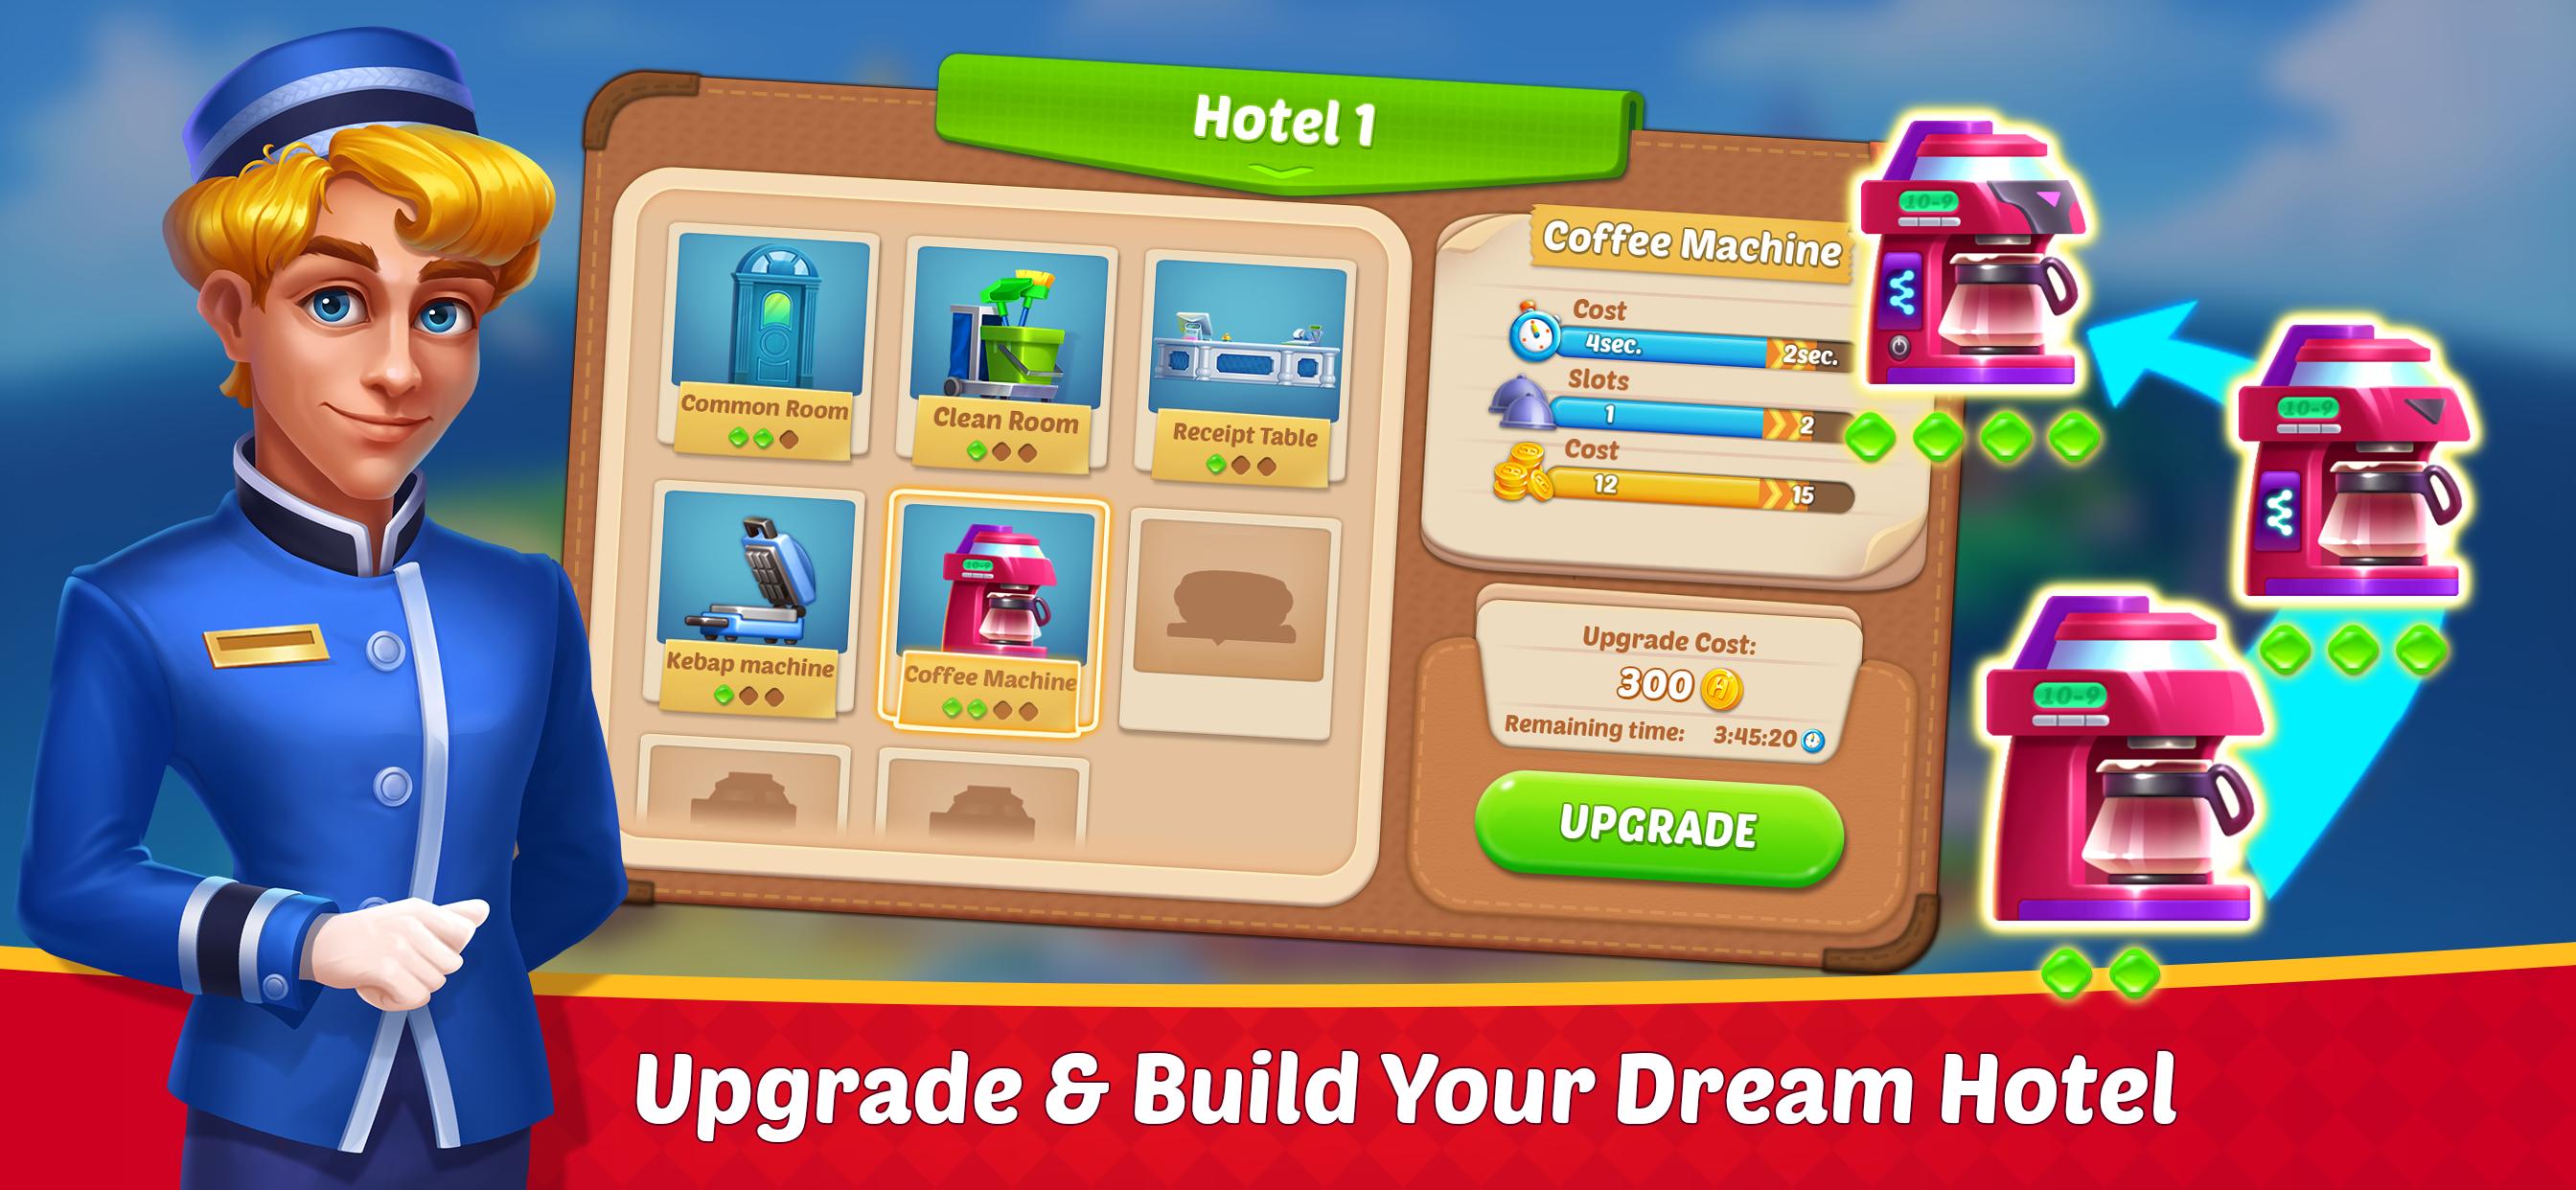 Dream Hotel Hotel Manager Simulation games 1.2.4 Screenshot 4